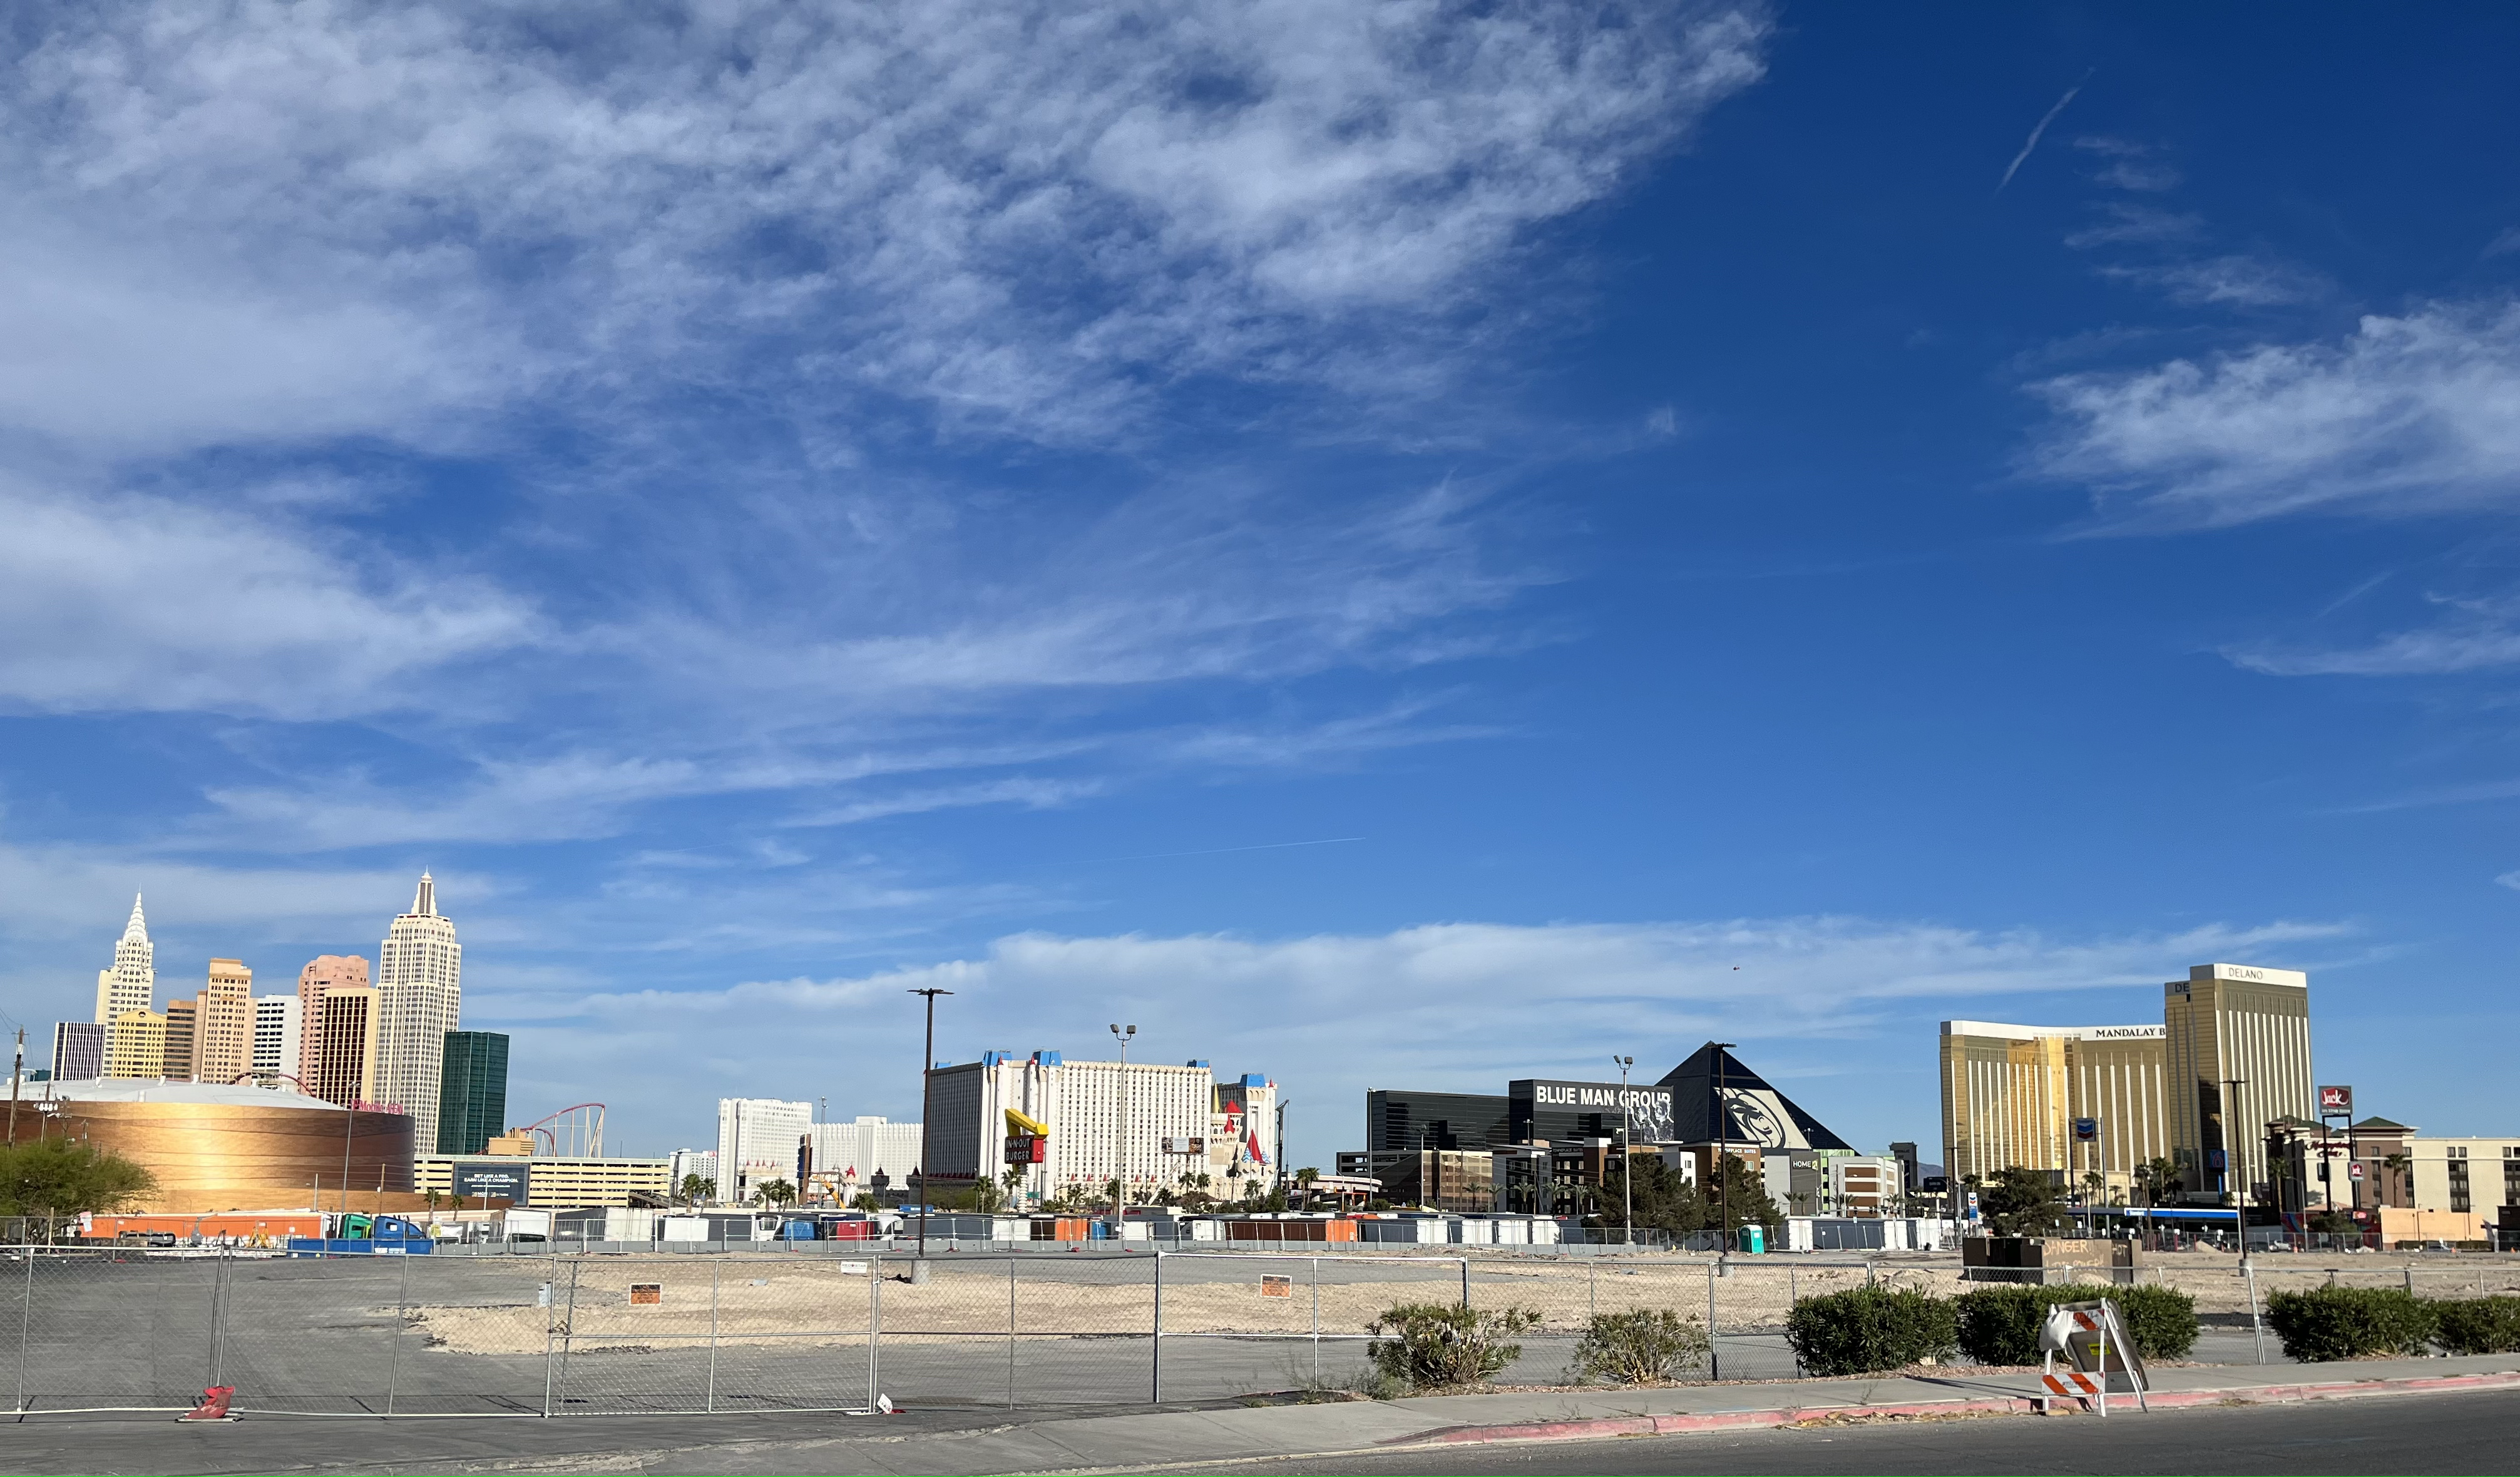 Athletics purchase Las Vegas land for ballpark, focused on leaving